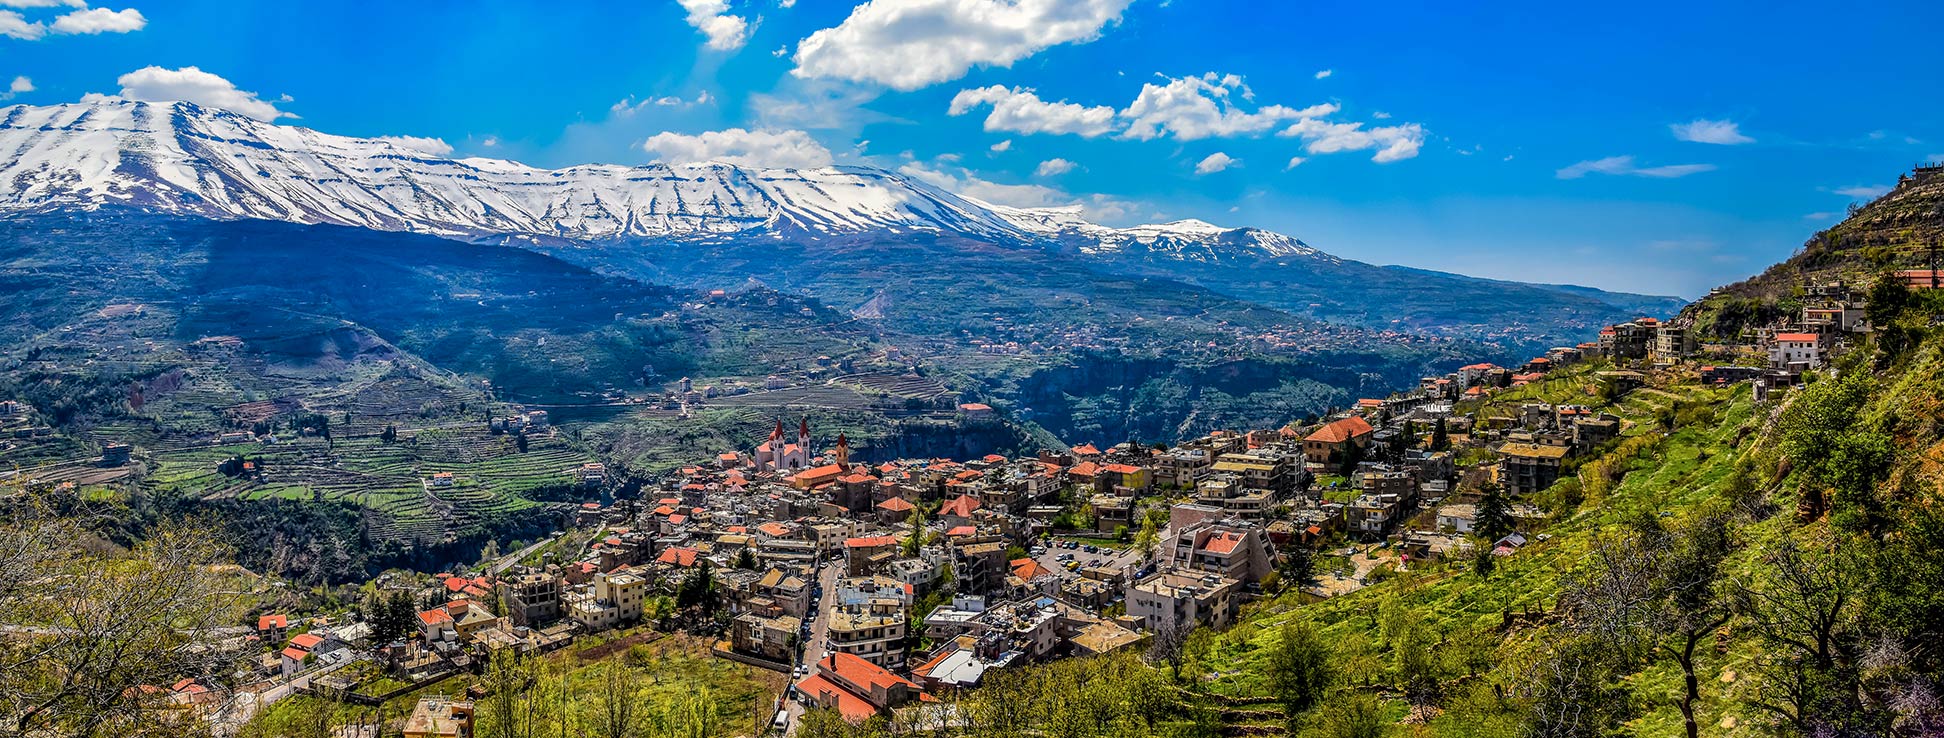 레바논 산